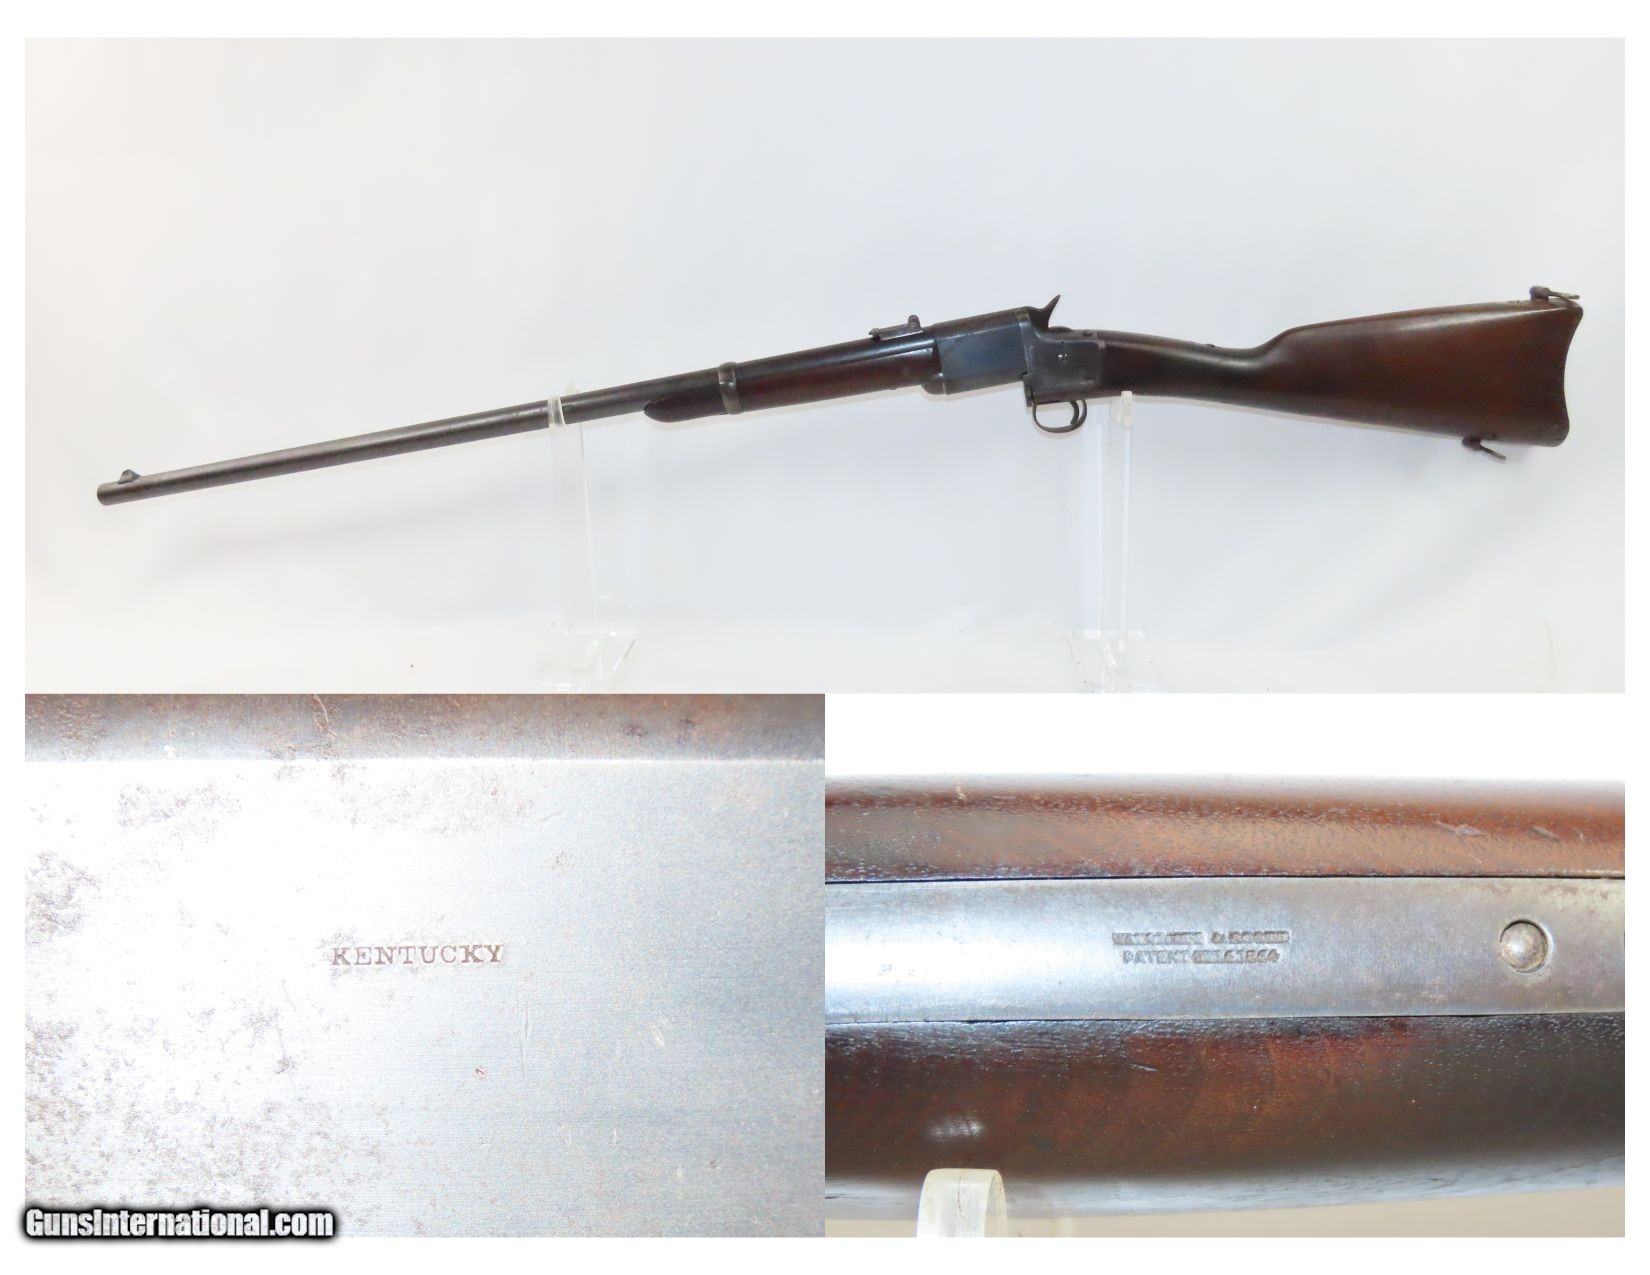 Kentucky Rifle used in civil war